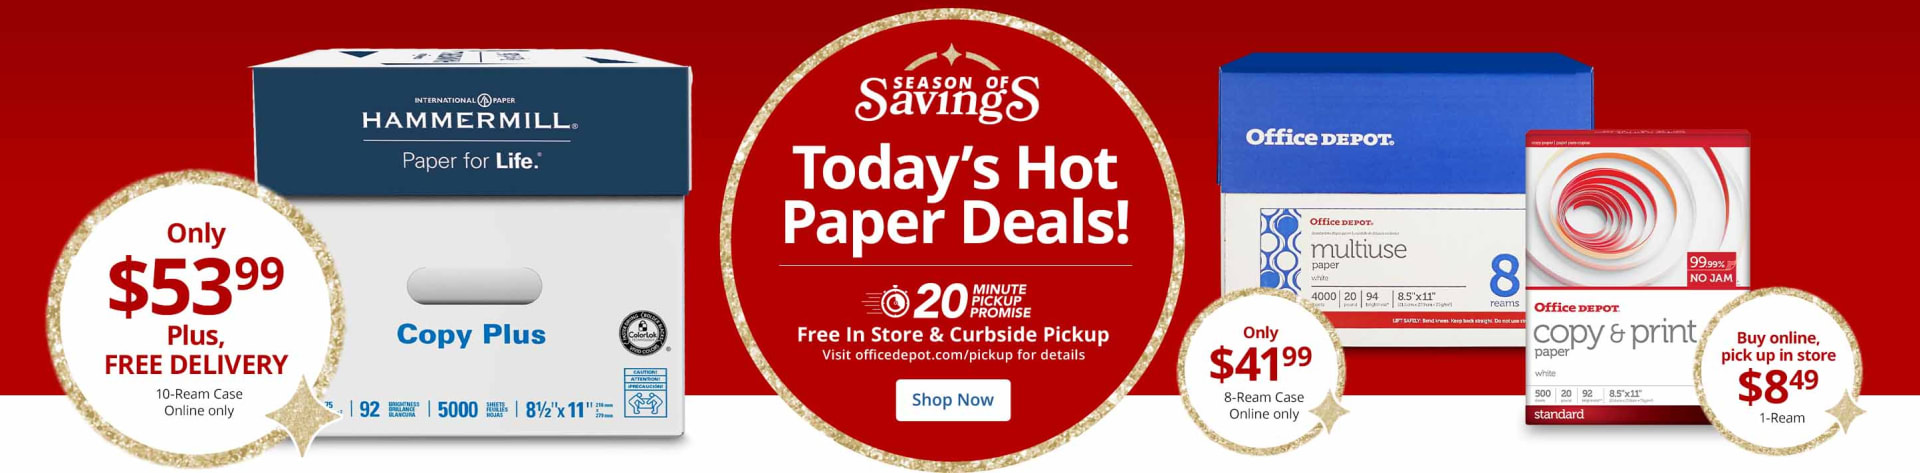 Today's Hot Paper Deals!